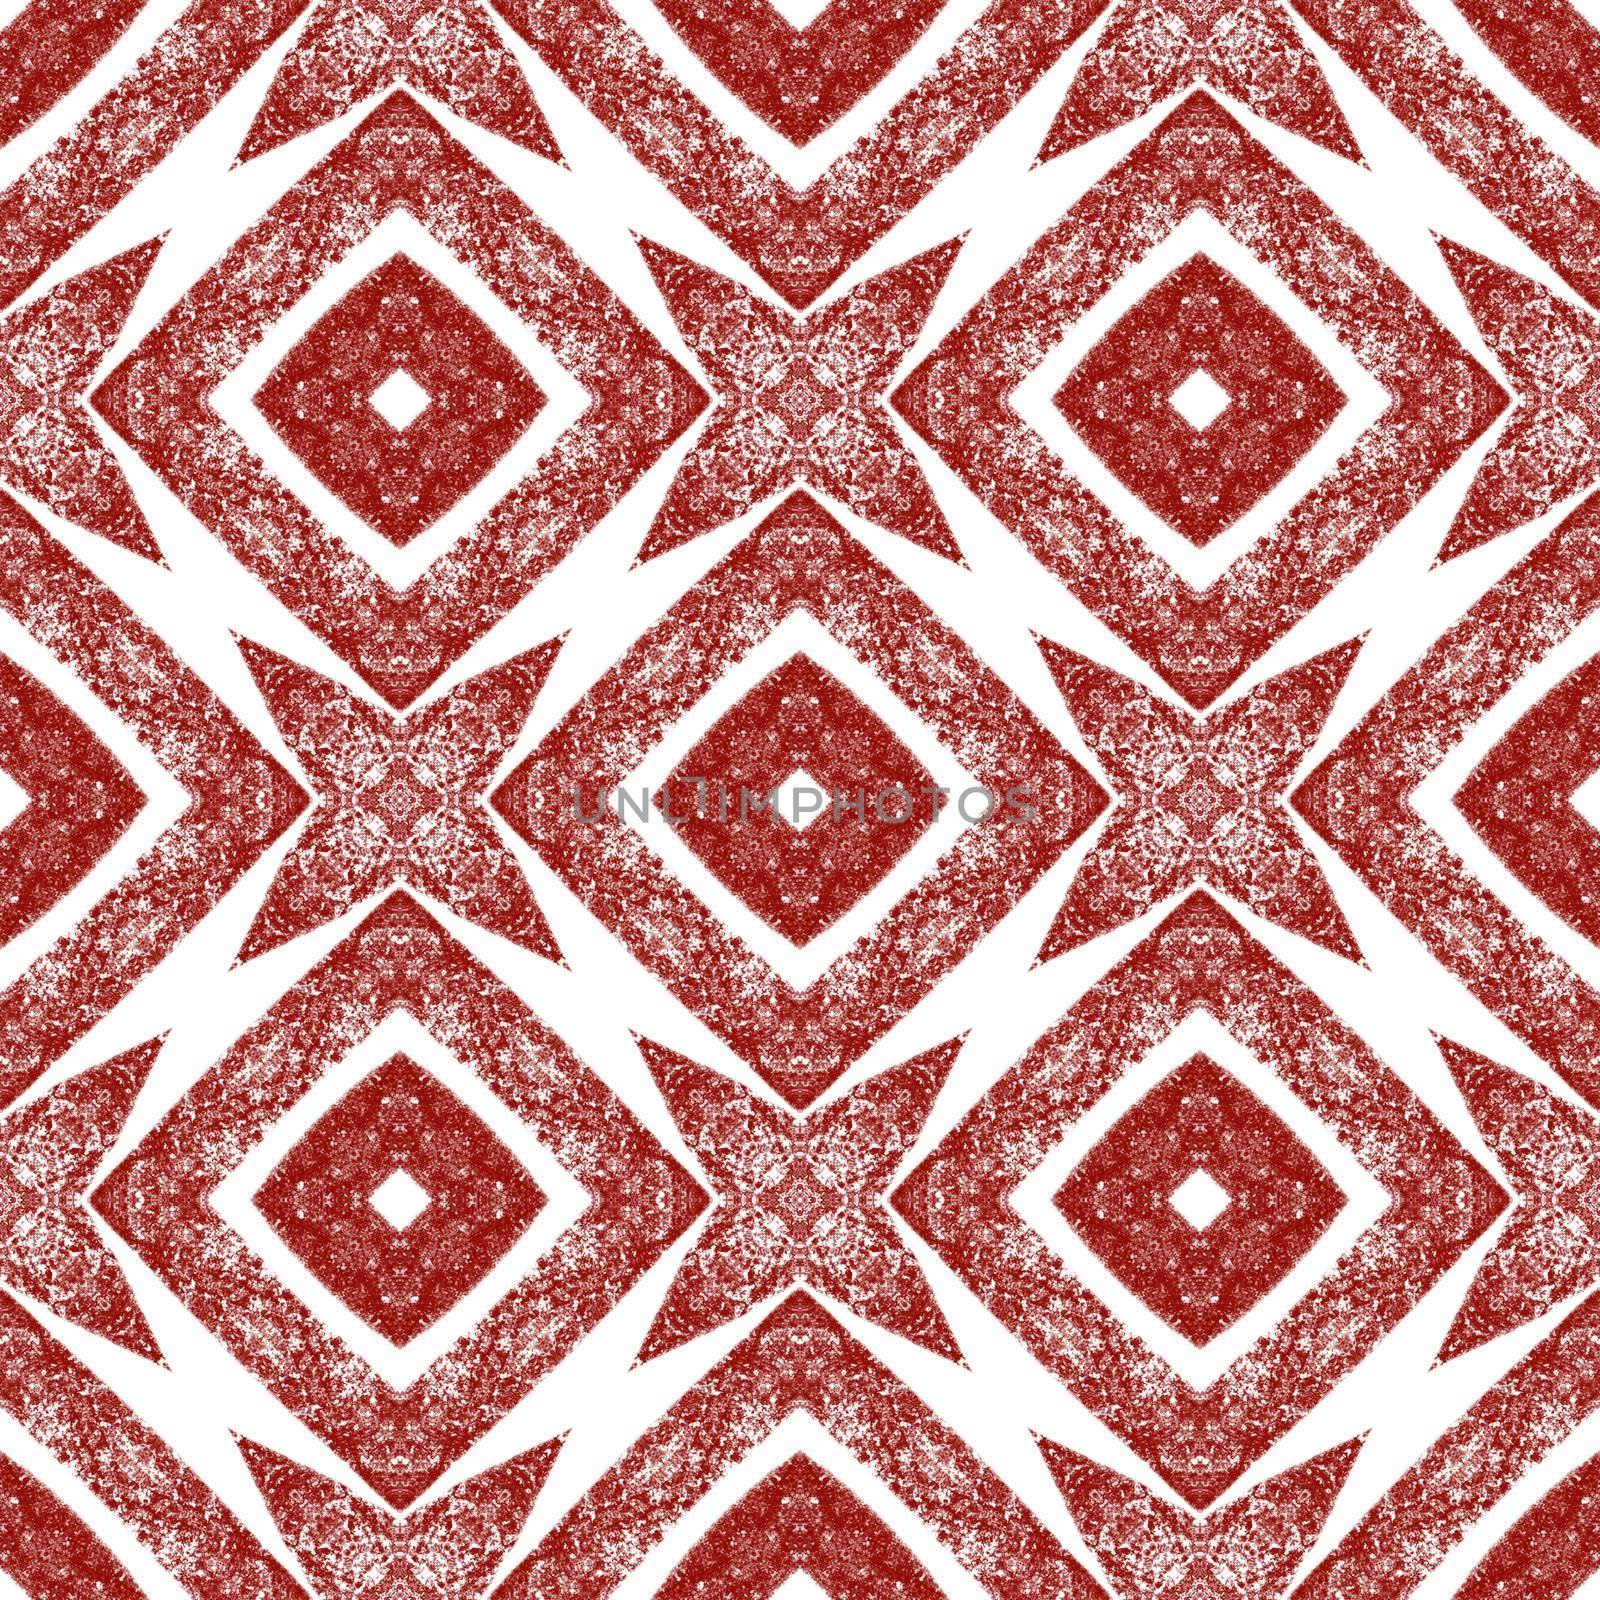 Chevron stripes design. Wine red symmetrical by beginagain